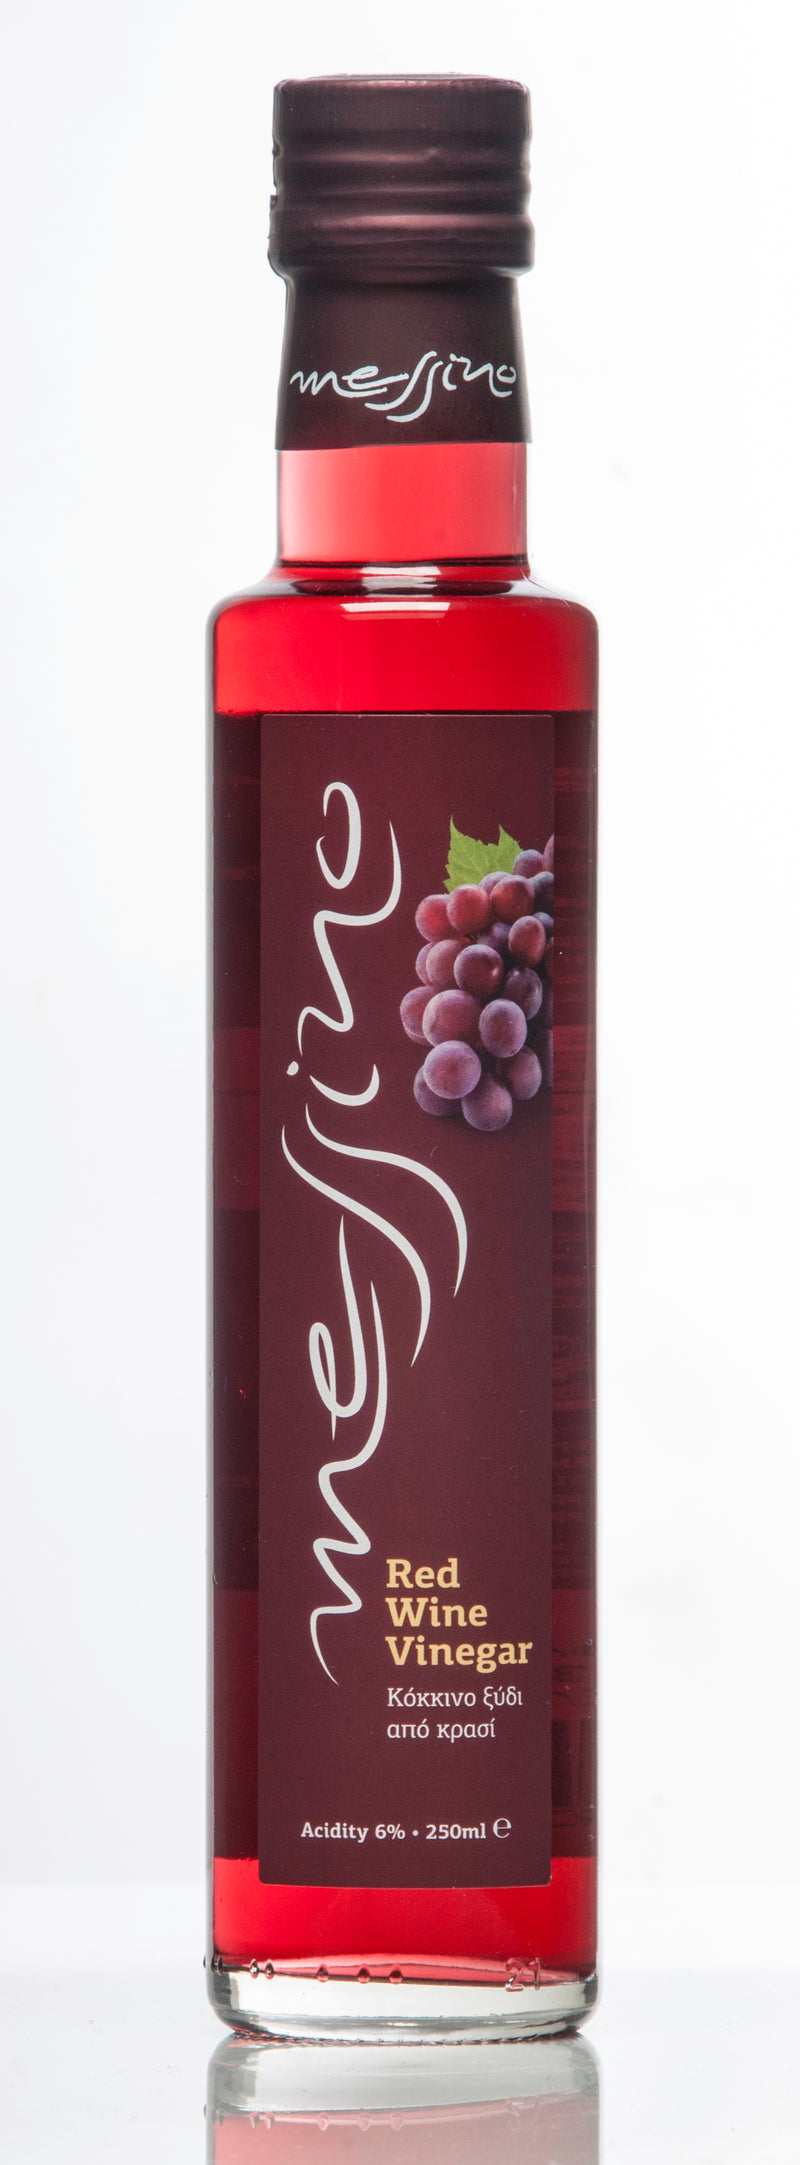 Front label of bottle of Messino Red Wine Vinegar